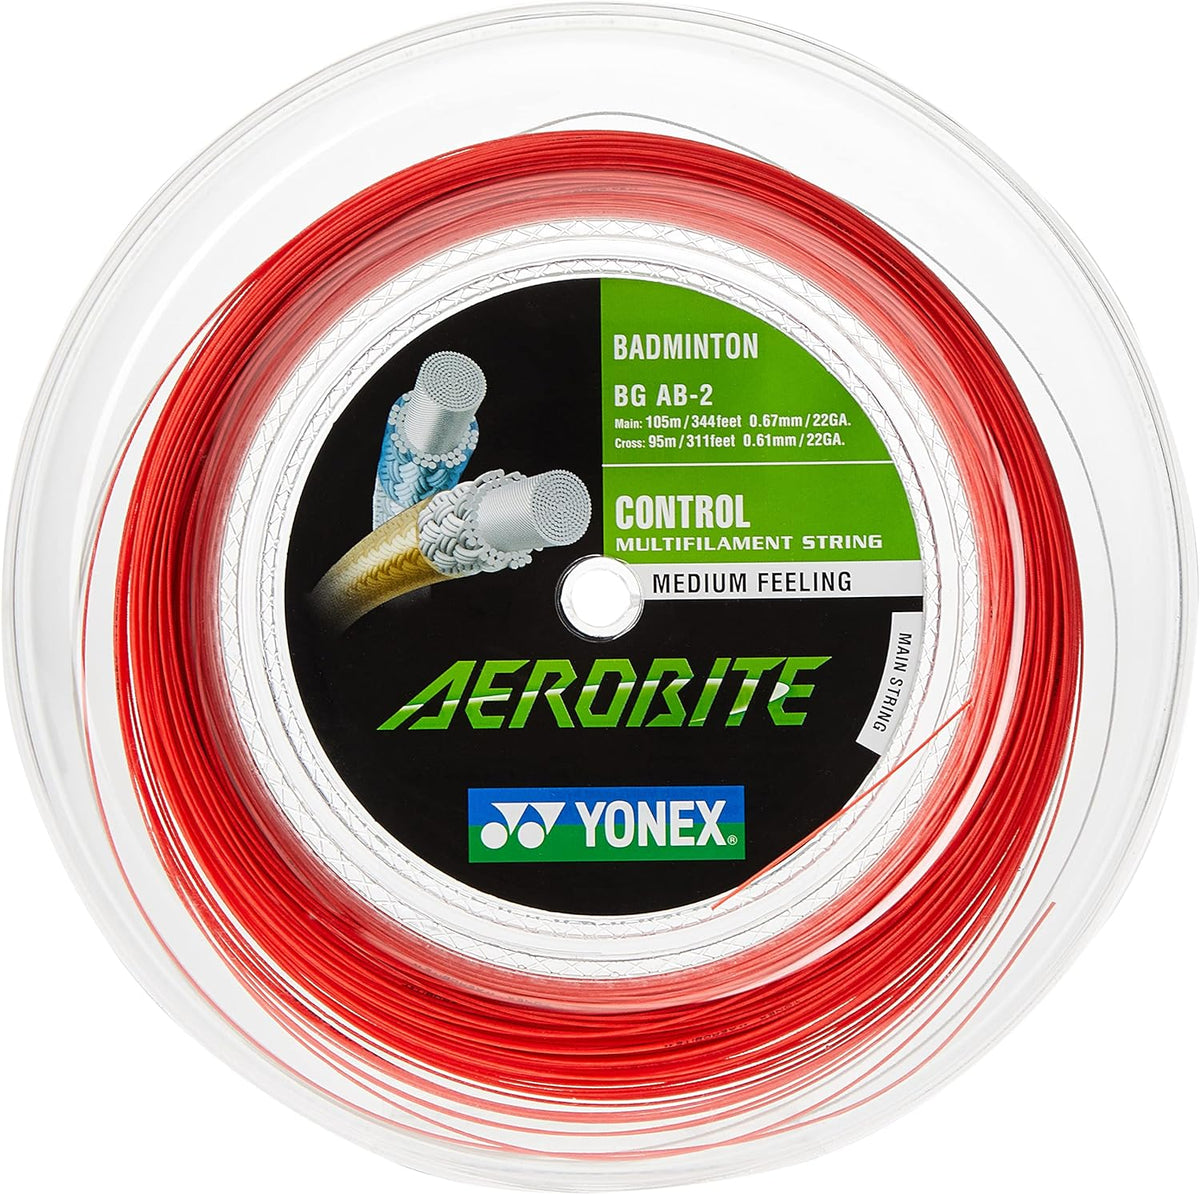 Yonex Aerobite Badminton String [200m Reel]